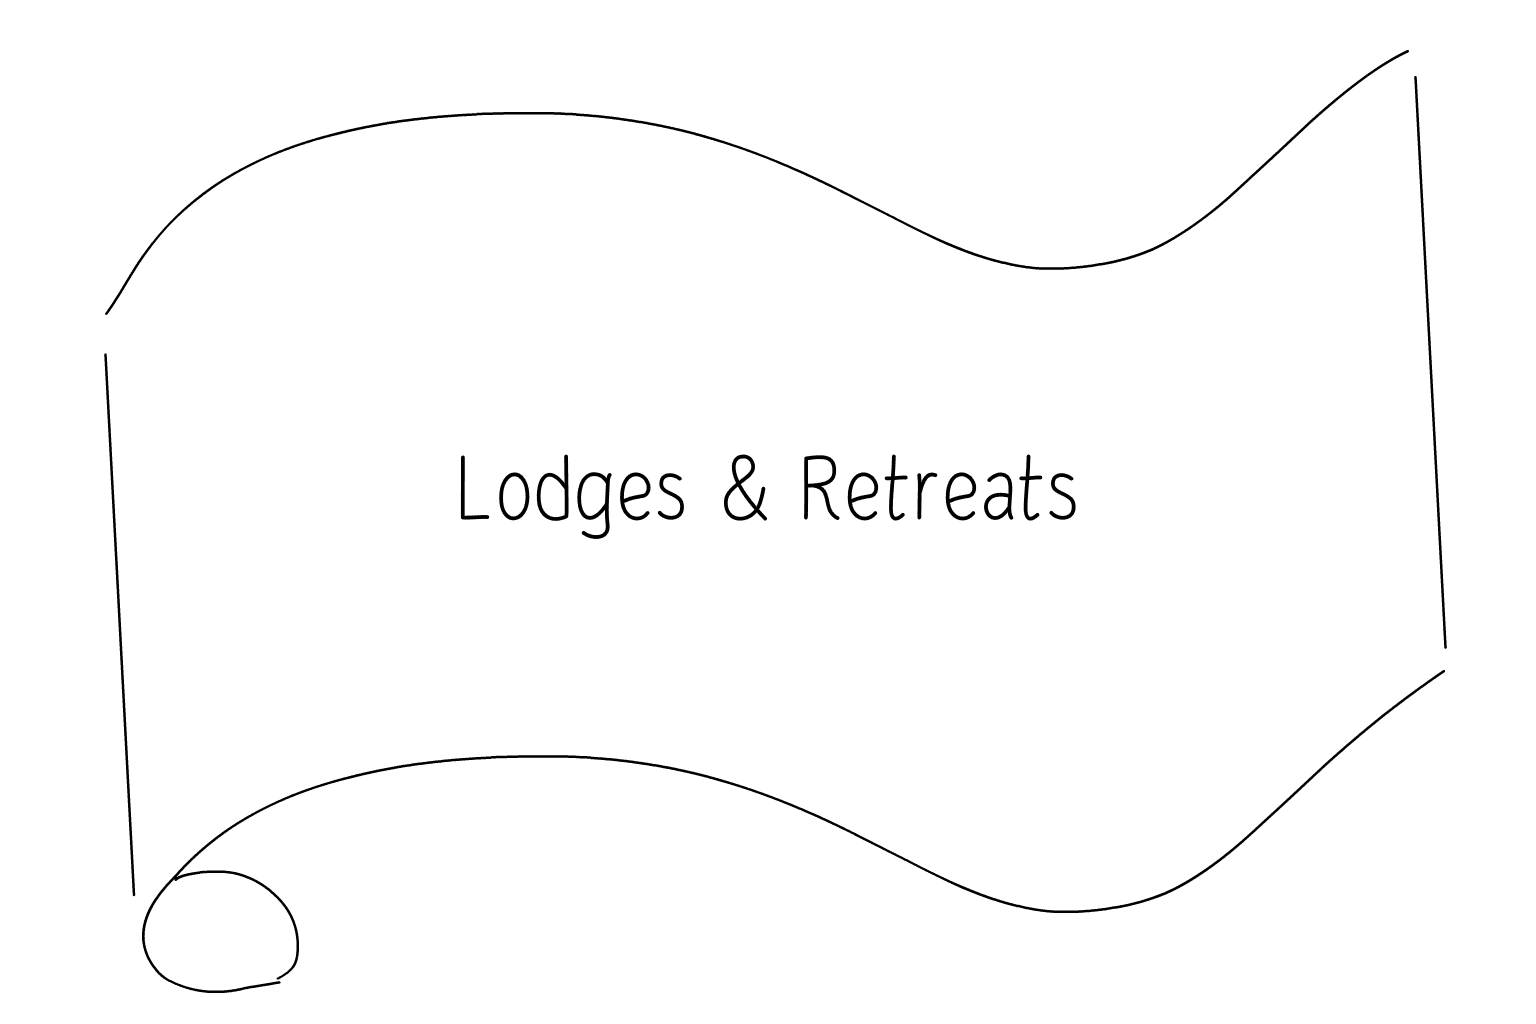 Illustration of wedding lodge and retreat